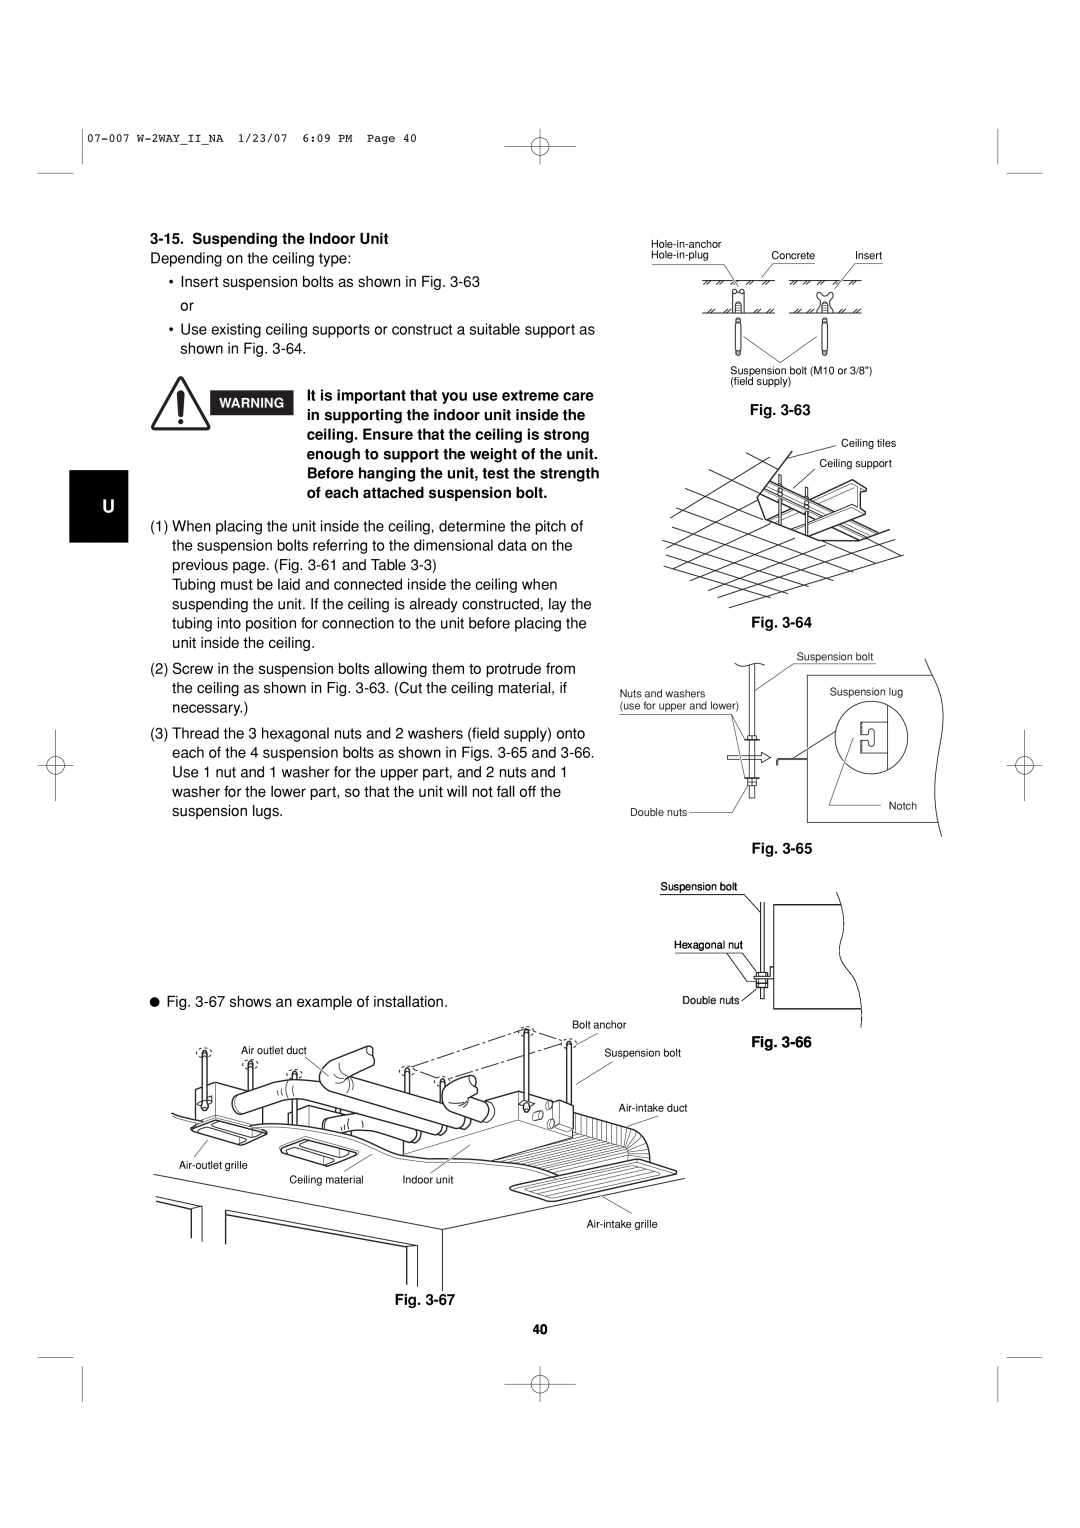 Sanyo 85464359982001 installation instructions Suspending the Indoor Unit, Fig 